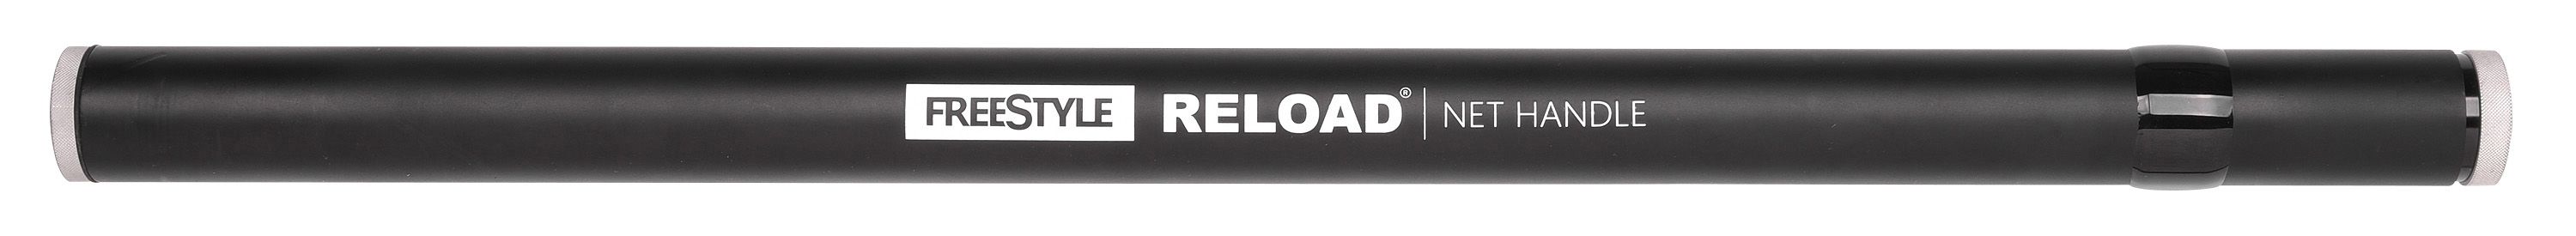 Spro Freestyle Reload Net Handle Schepnetsteel - 4,00m